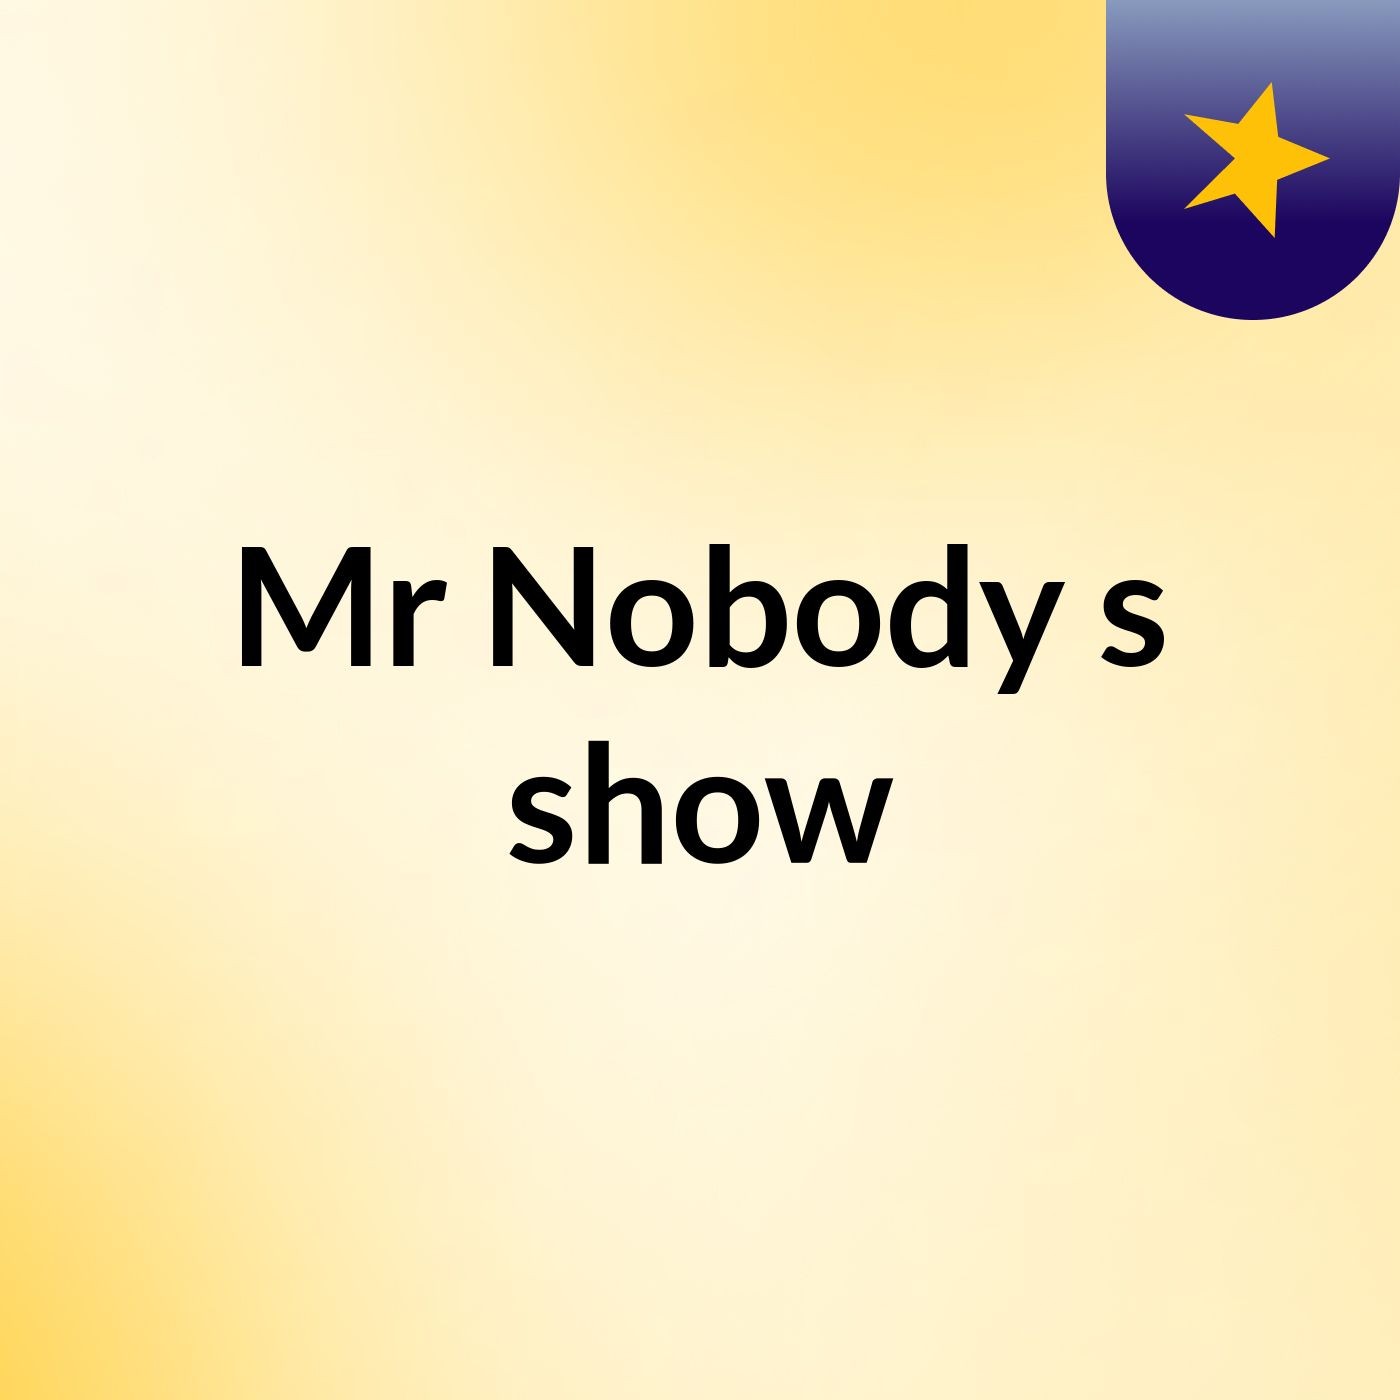 Mr Nobody's show